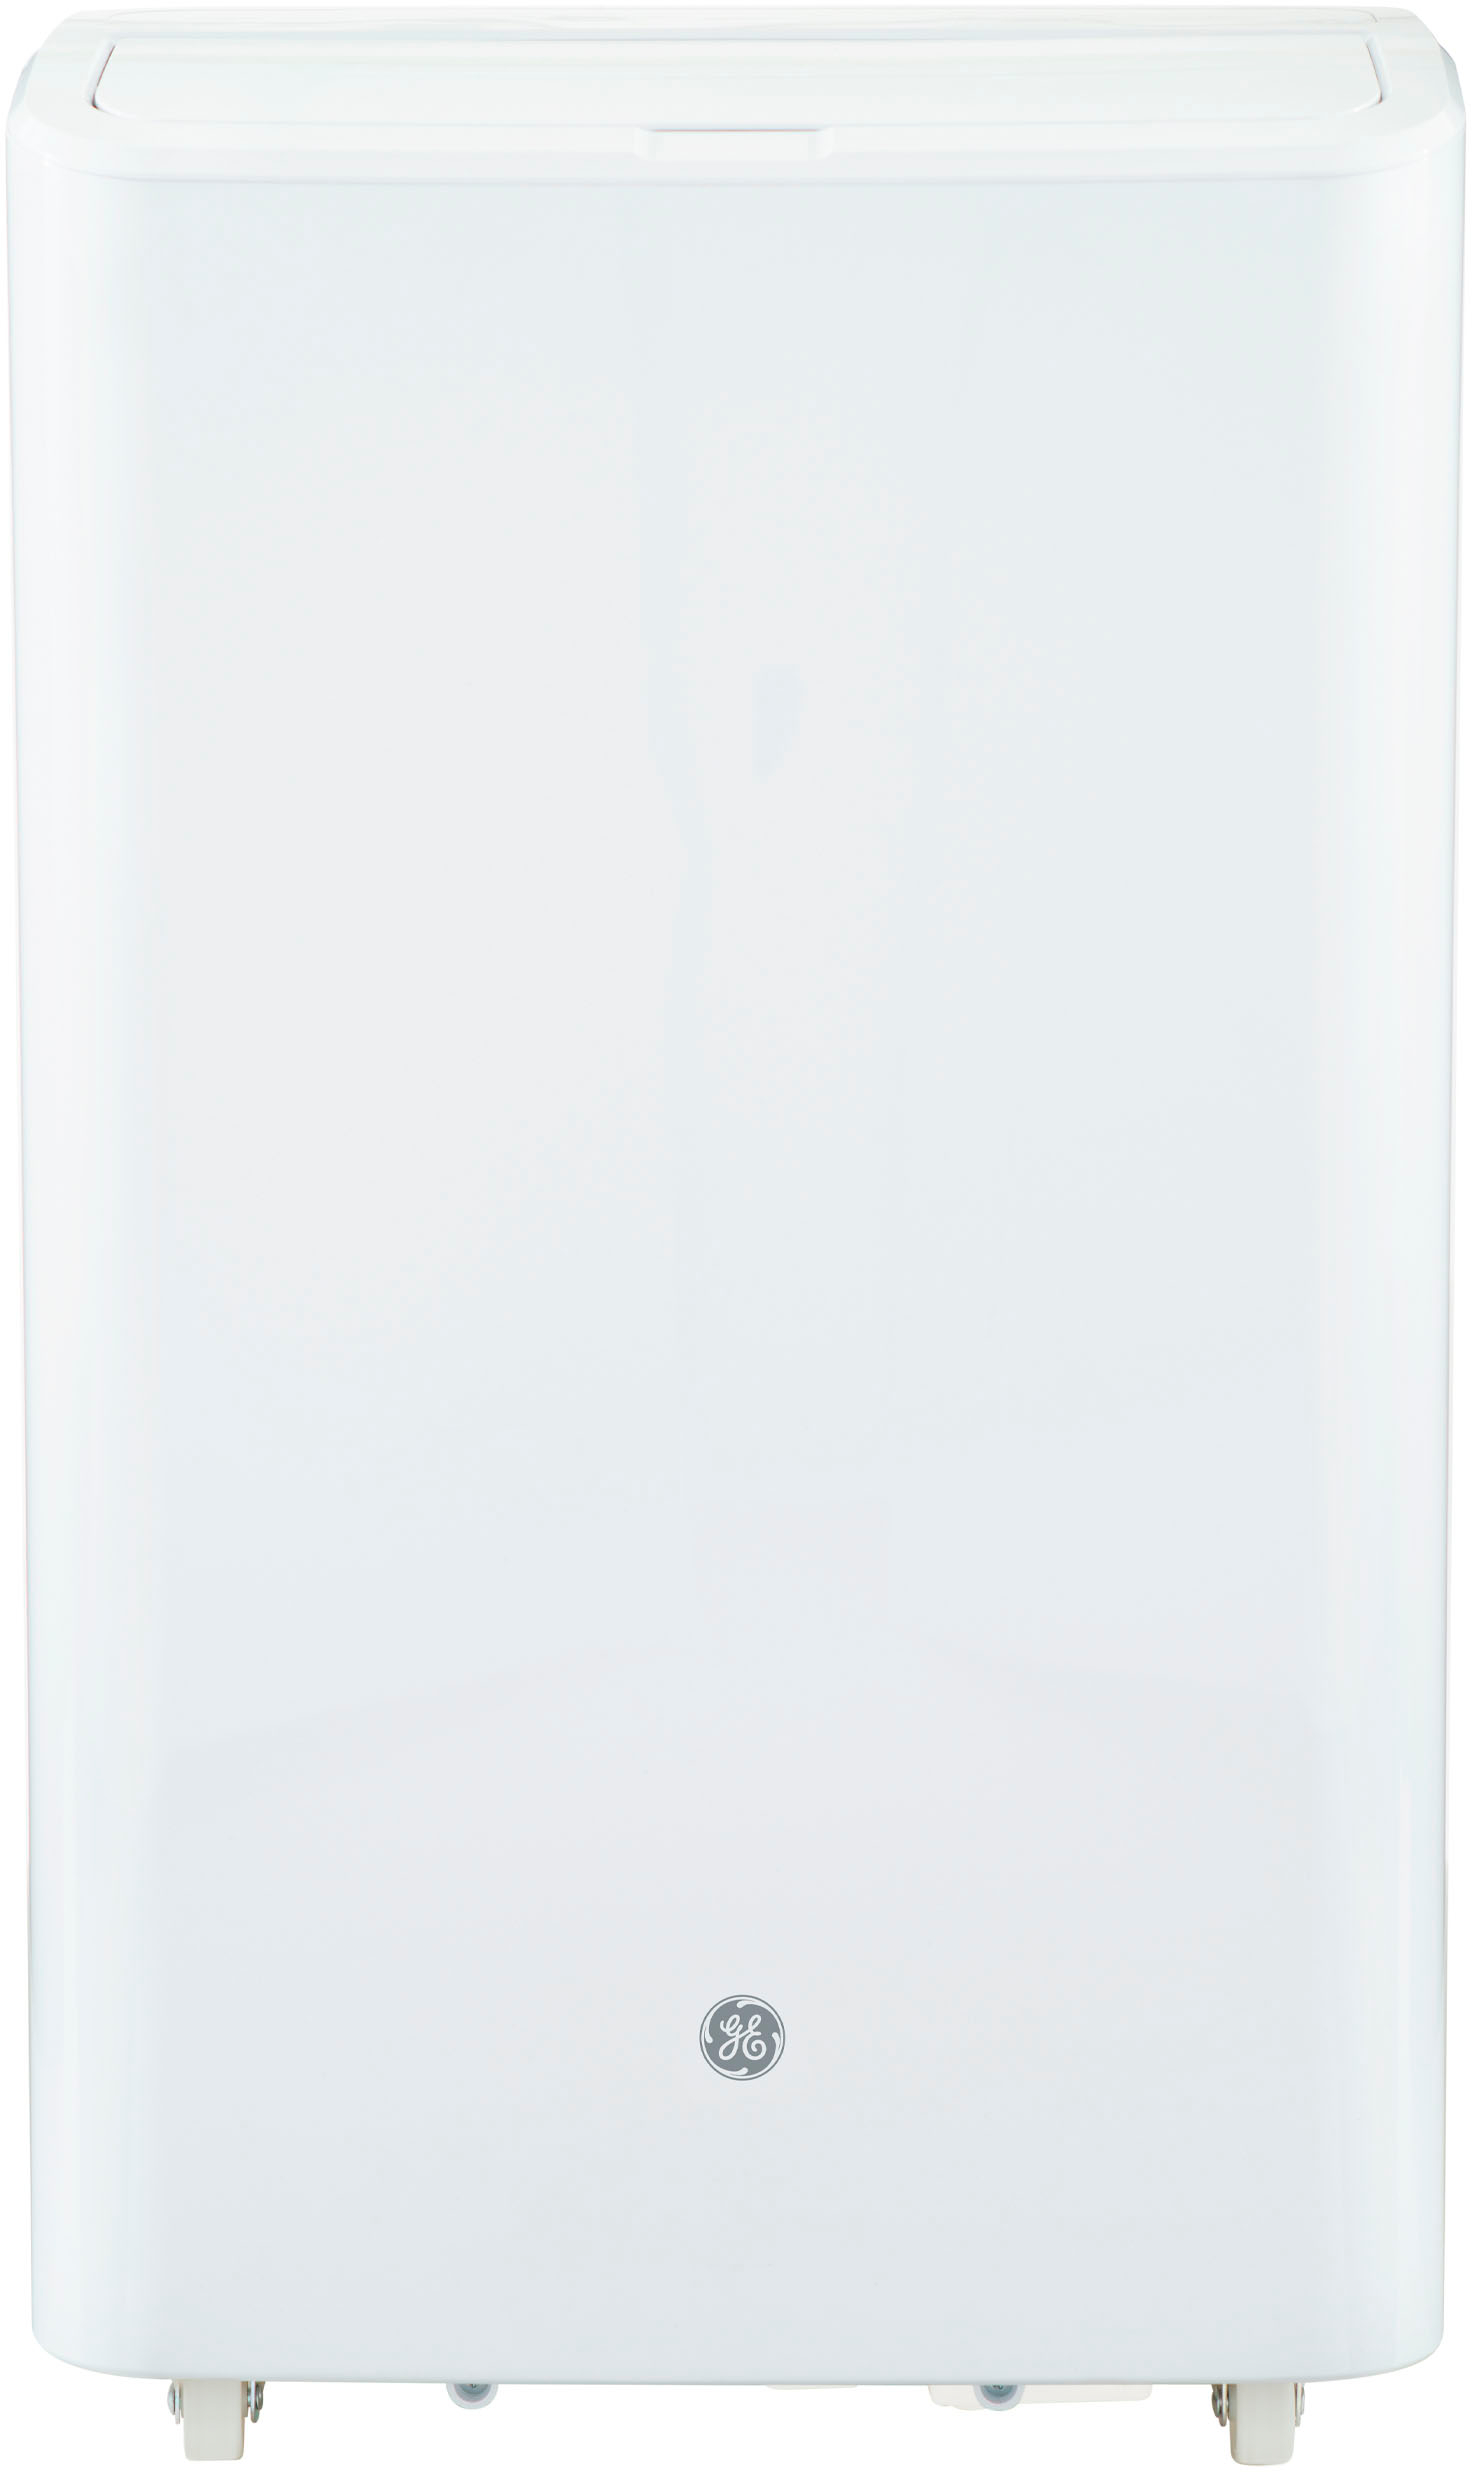 GE 300 Sq. Ft. 7550 BTU Smart Portable Air Conditioner 10 White 